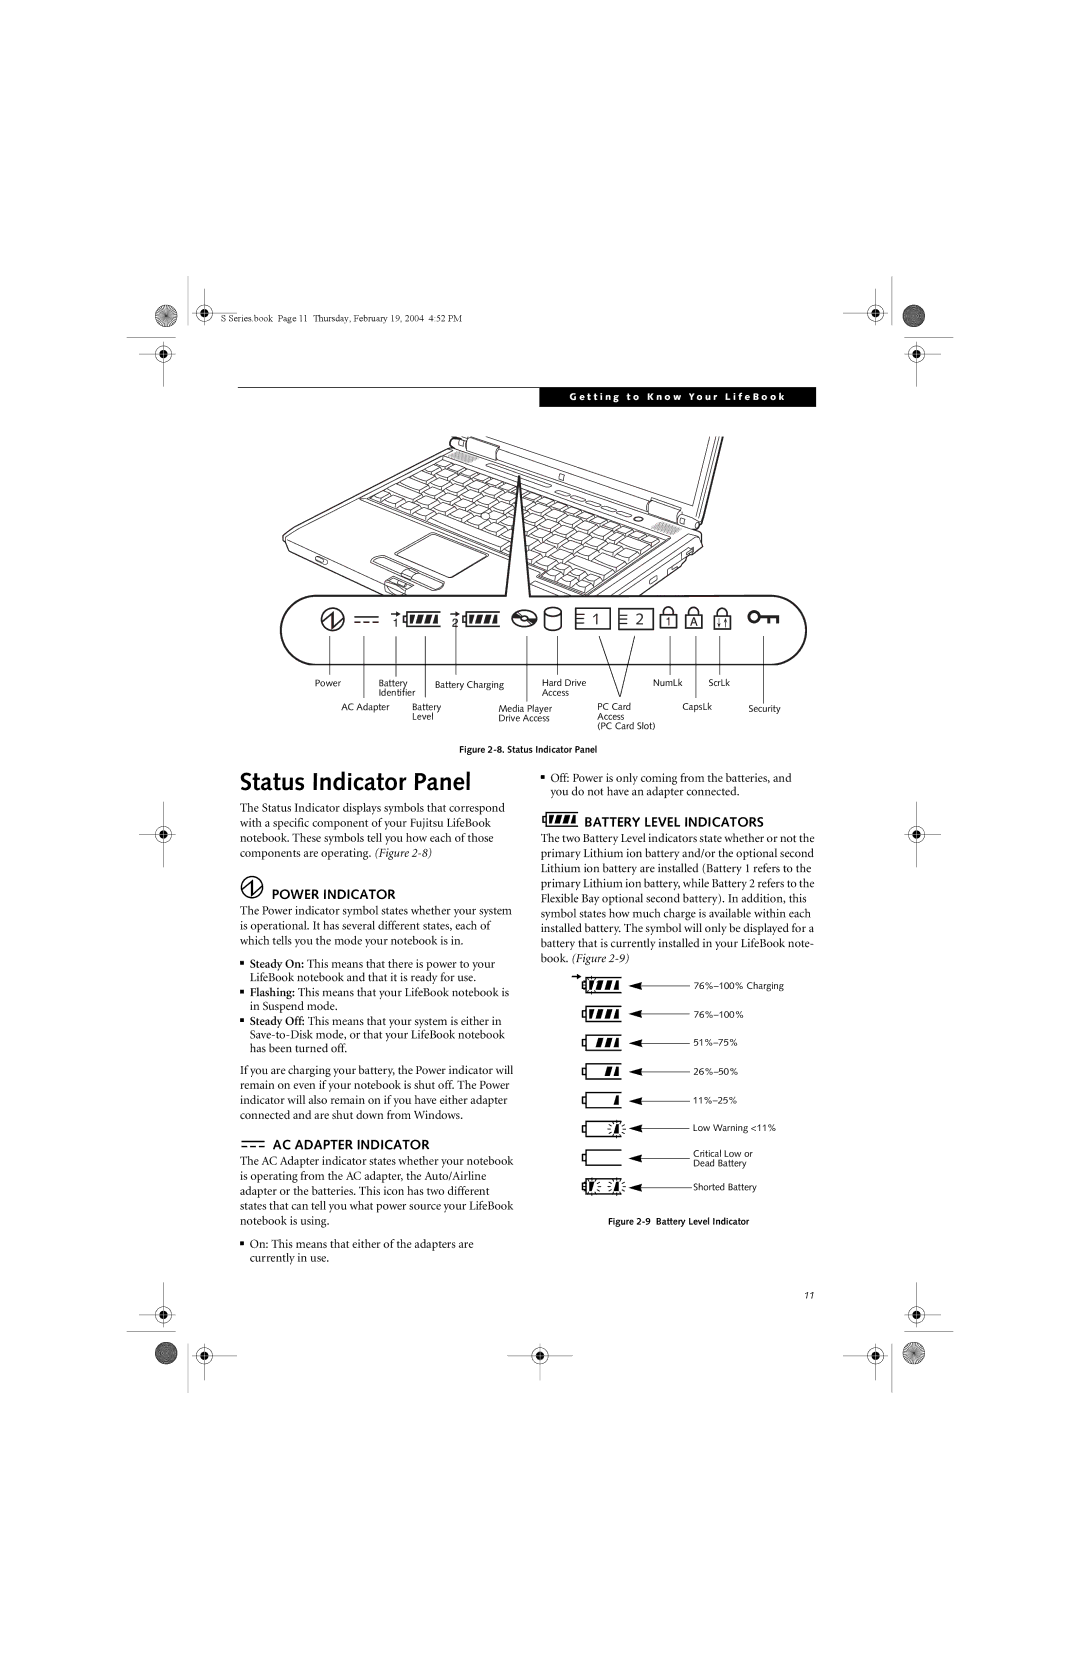 Fujitsu S7010D manual Status Indicator Panel, Power Indicator, AC Adapter Indicator, Battery Level Indicators 